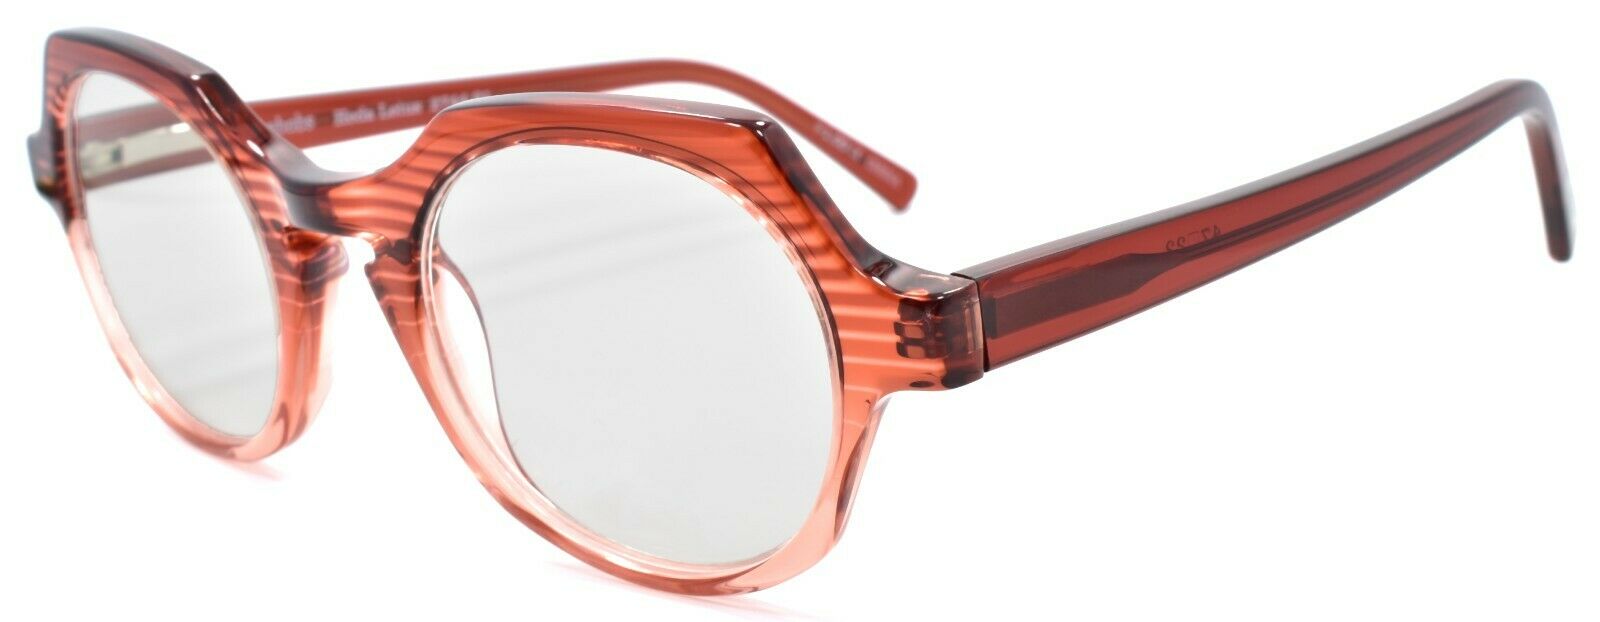 1-Eyebobs Heda Letus 2744 01 Women's Reading Glasses Red / Pink Stripes +1.00-842754159692-IKSpecs